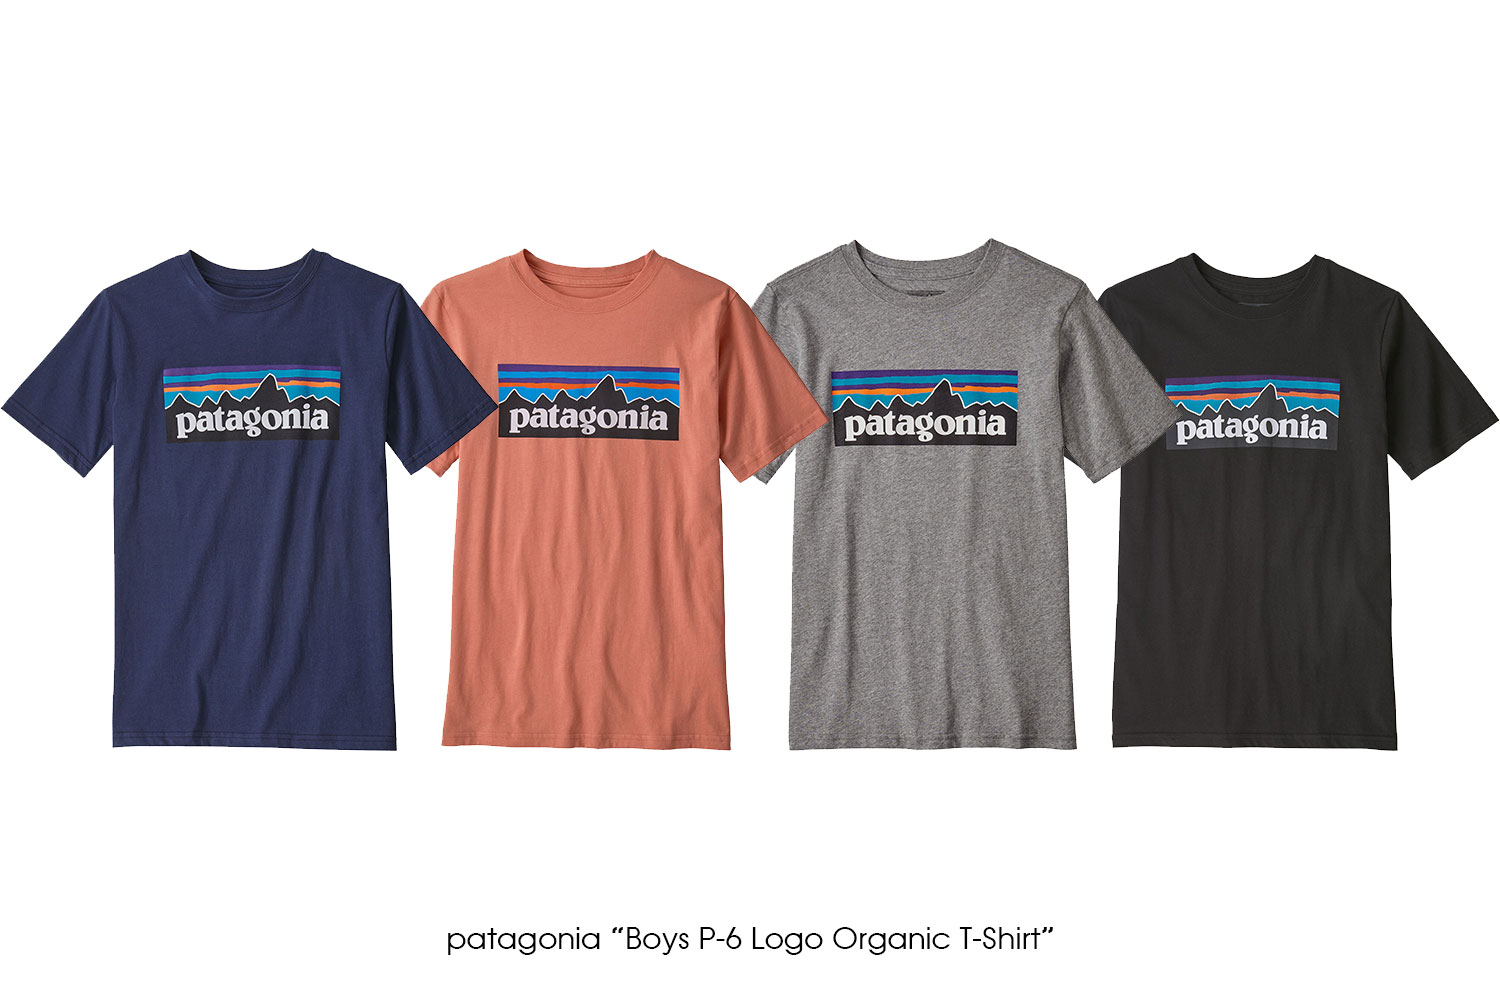 patagonia "Boys P-6 Logo Organic T-Shirt"